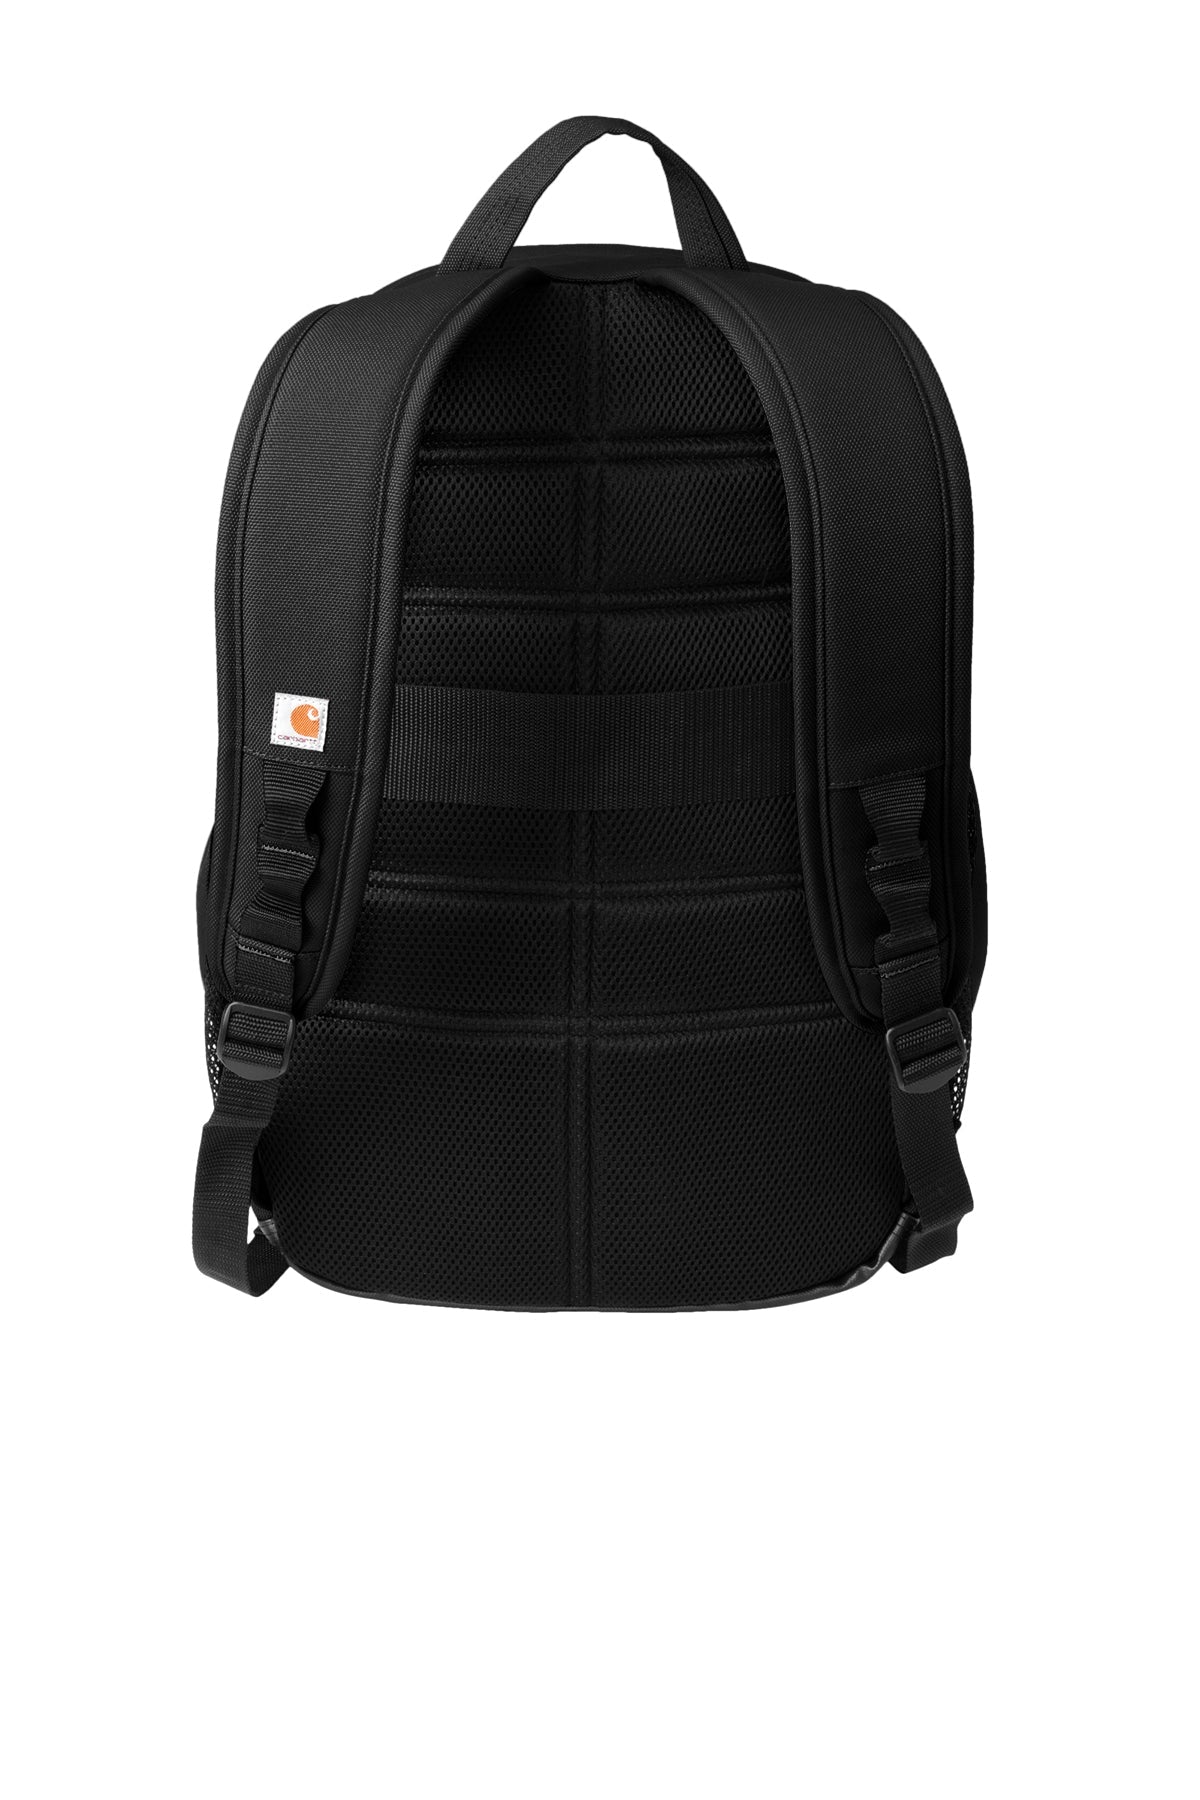 Carhartt 28L Foundry Series Custom Backpacks, Black